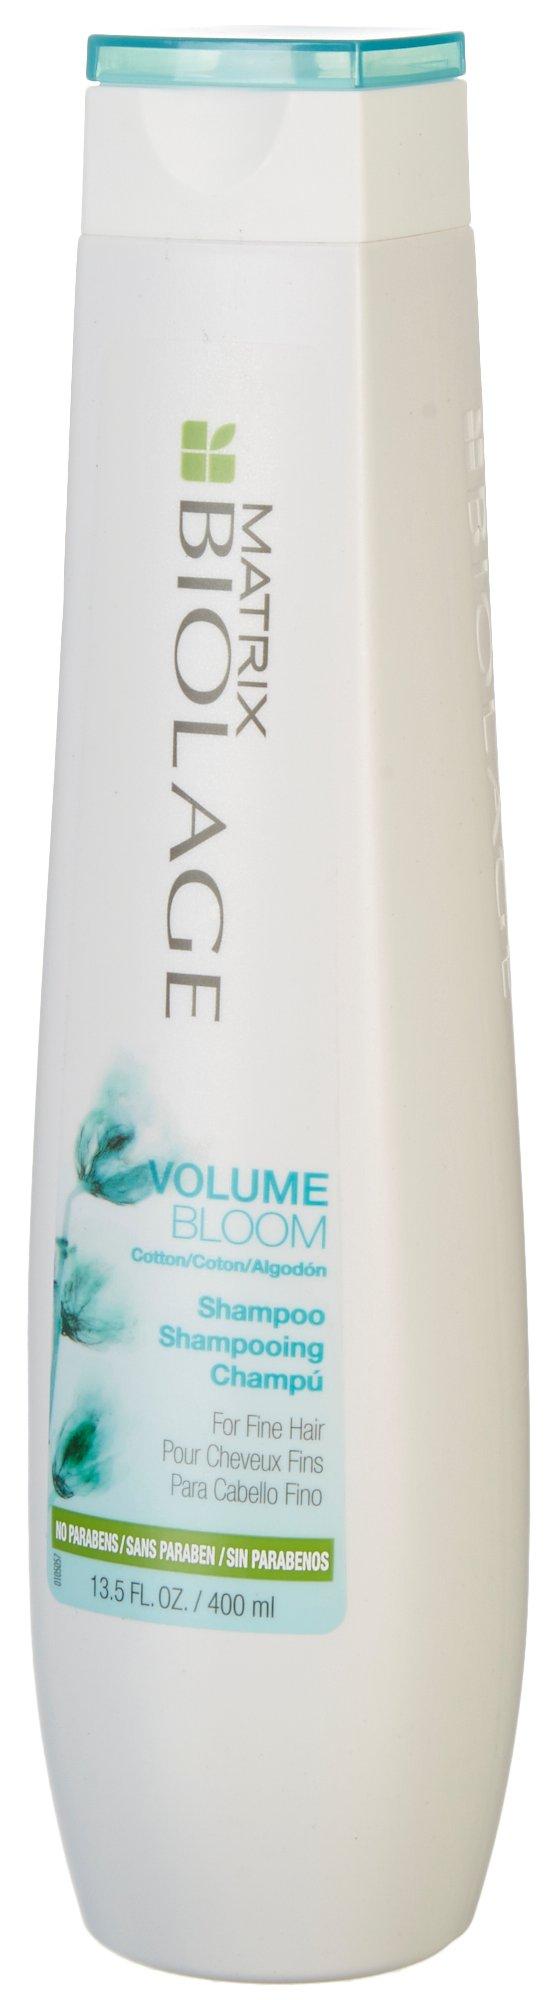 Biolage Volume Bloom Shampoo For Fine Hair 13.5 Fl. Oz.